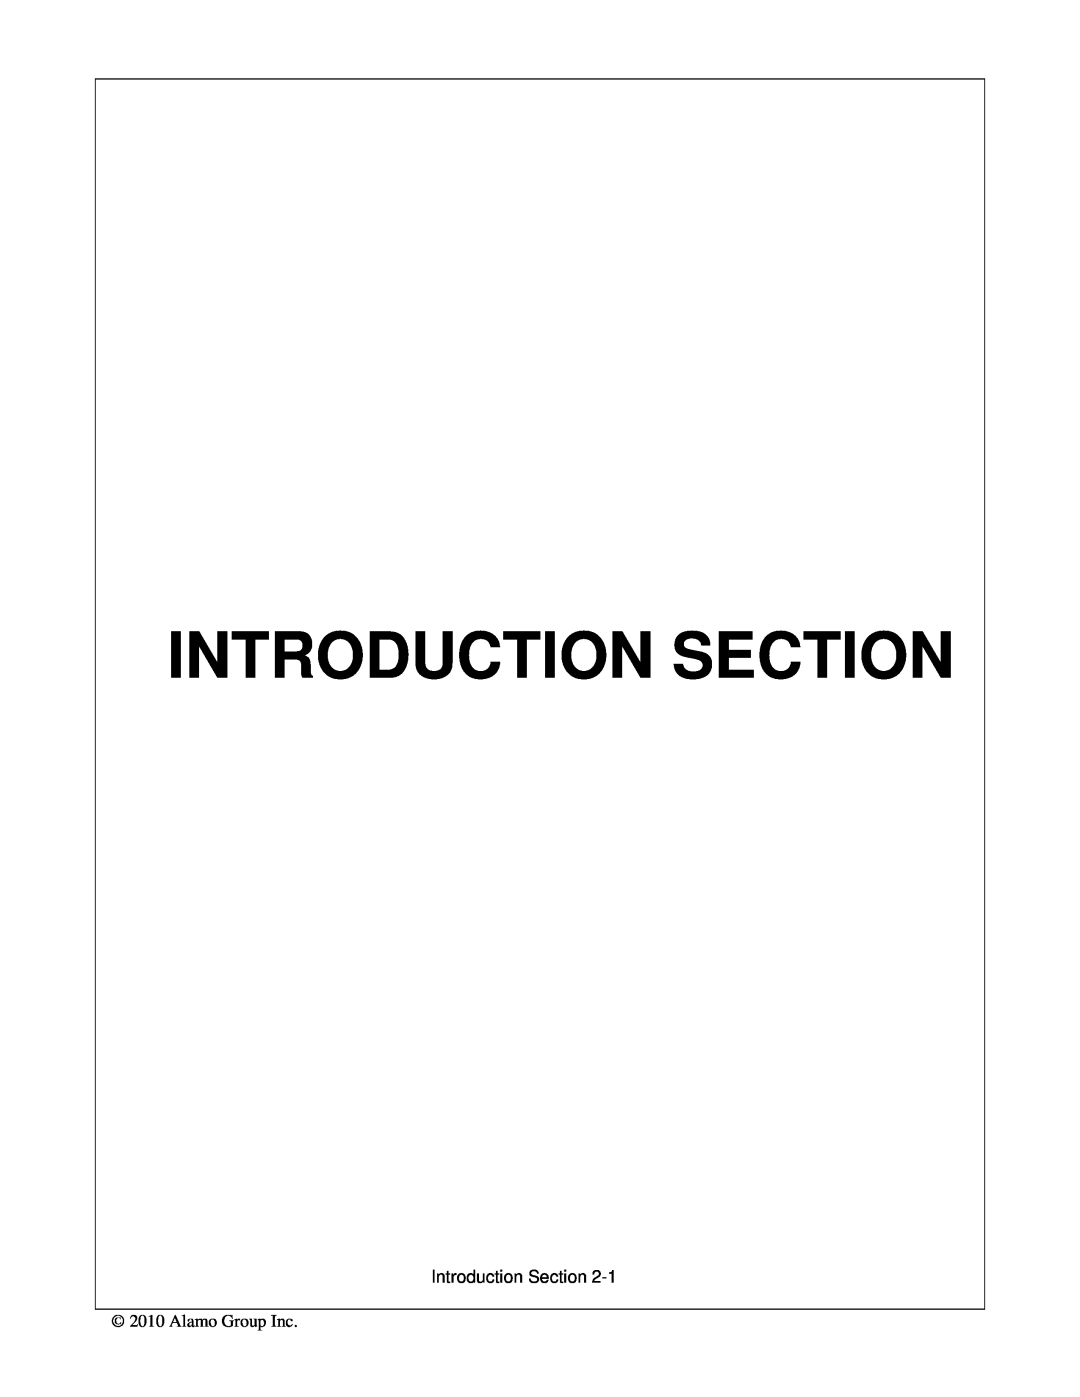 Bush Hog RMB 1865 manual Introduction Section 